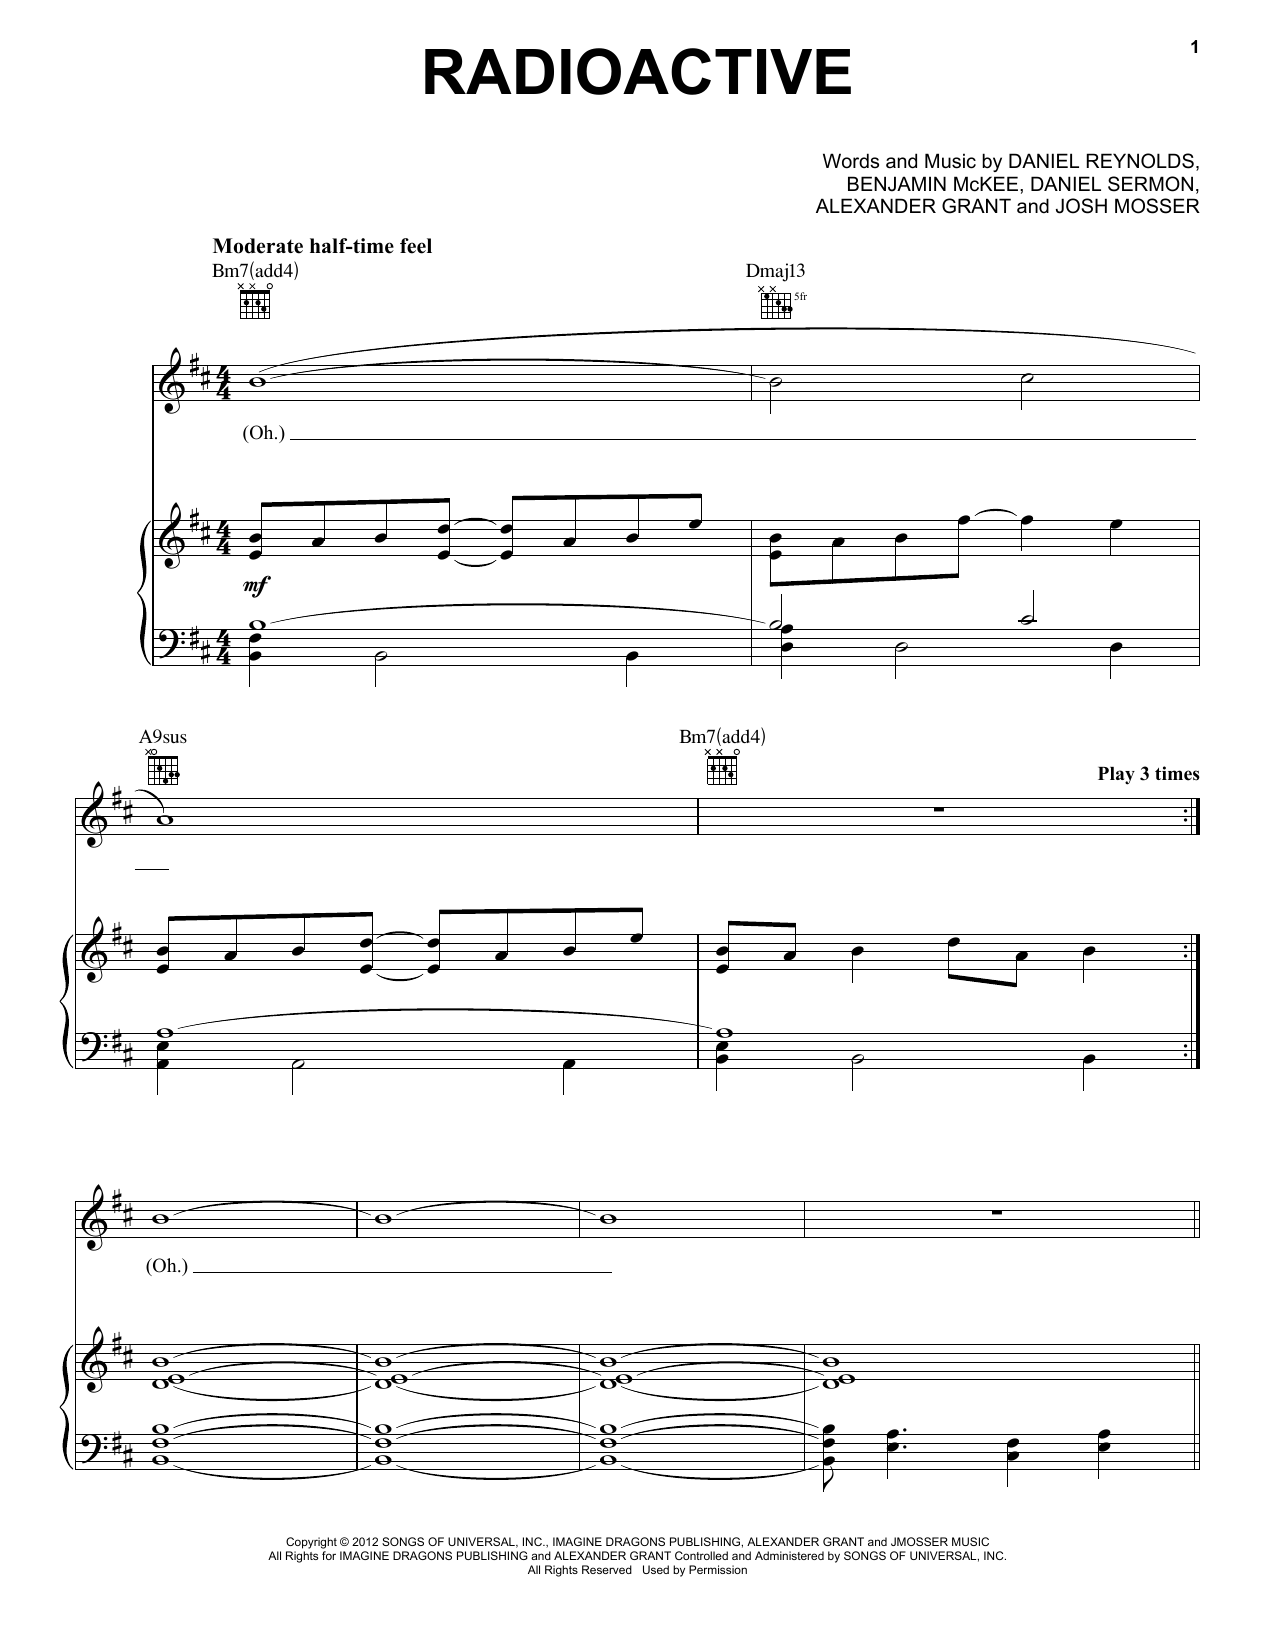 Imagine Dragons Radioactive Sheet Music Notes & Chords for Bass Guitar Tab - Download or Print PDF